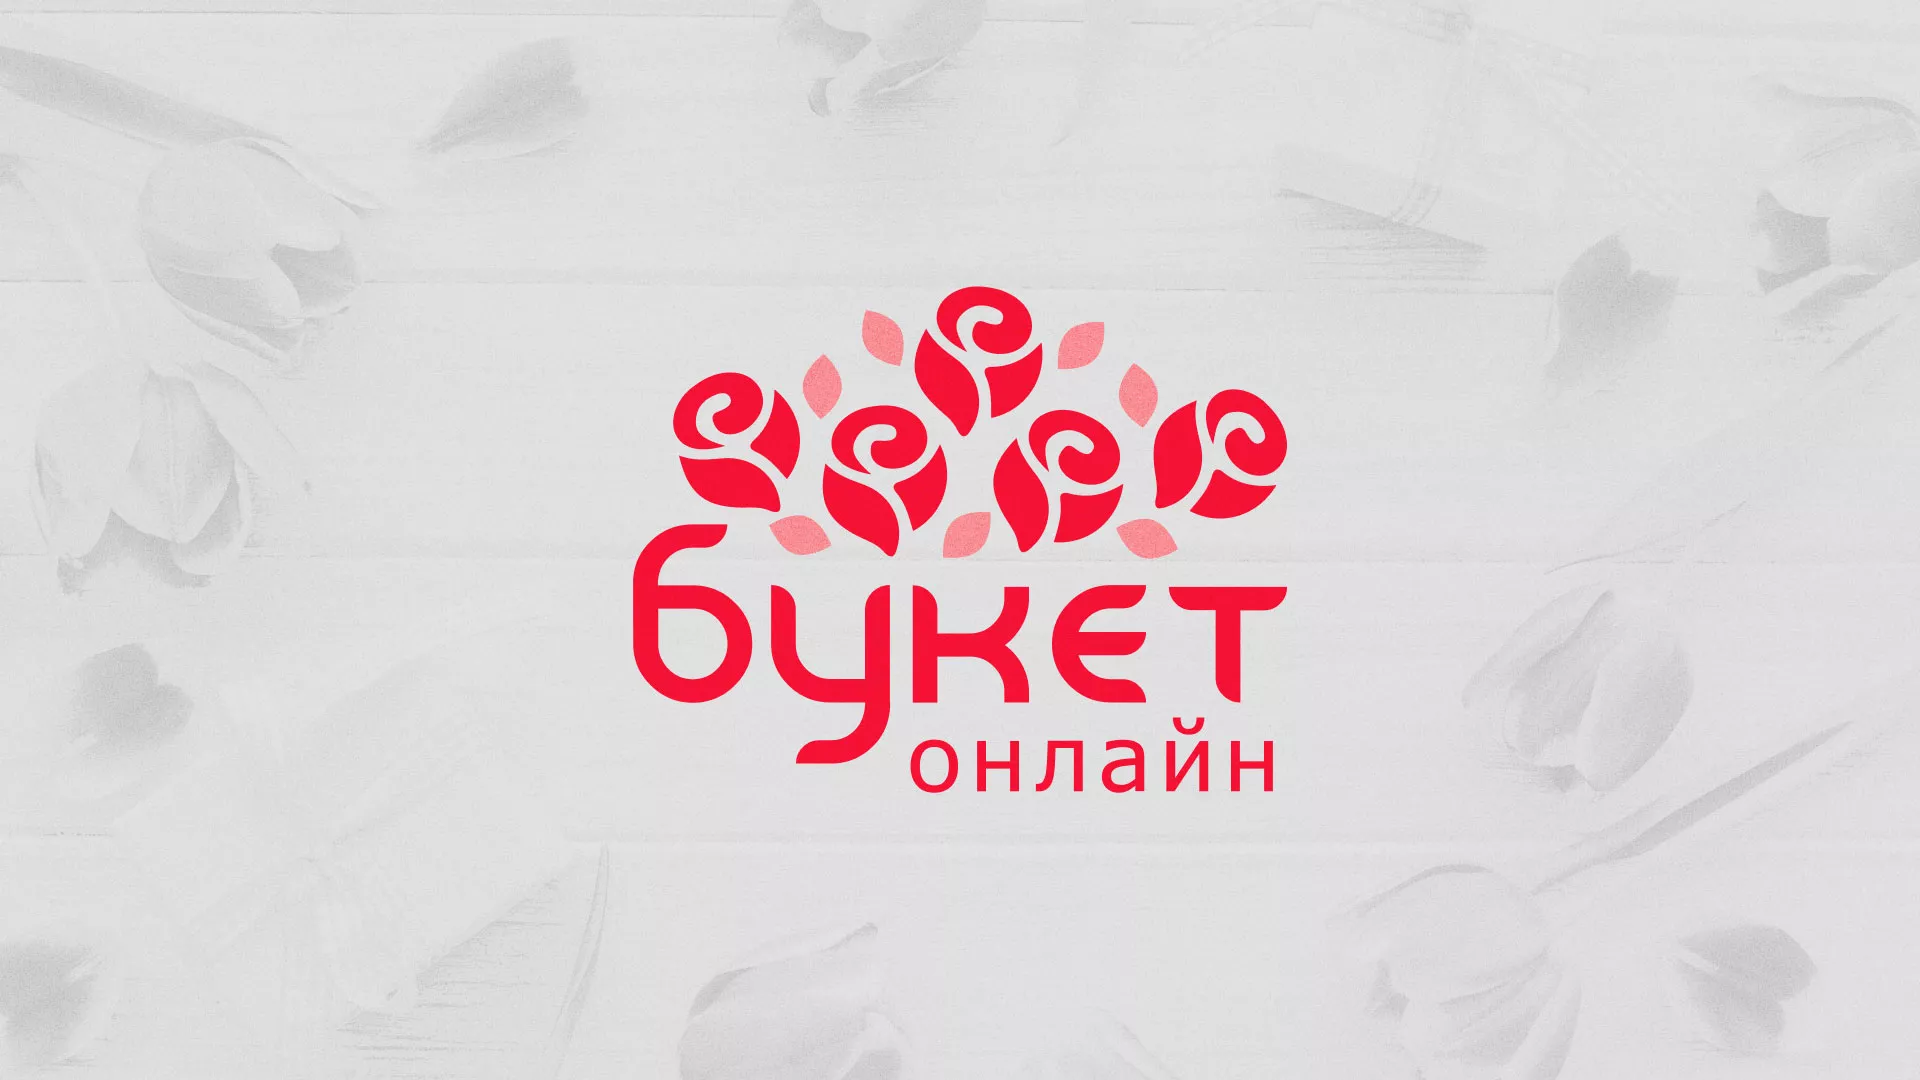 Создание интернет-магазина «Букет-онлайн» по цветам в Болхове